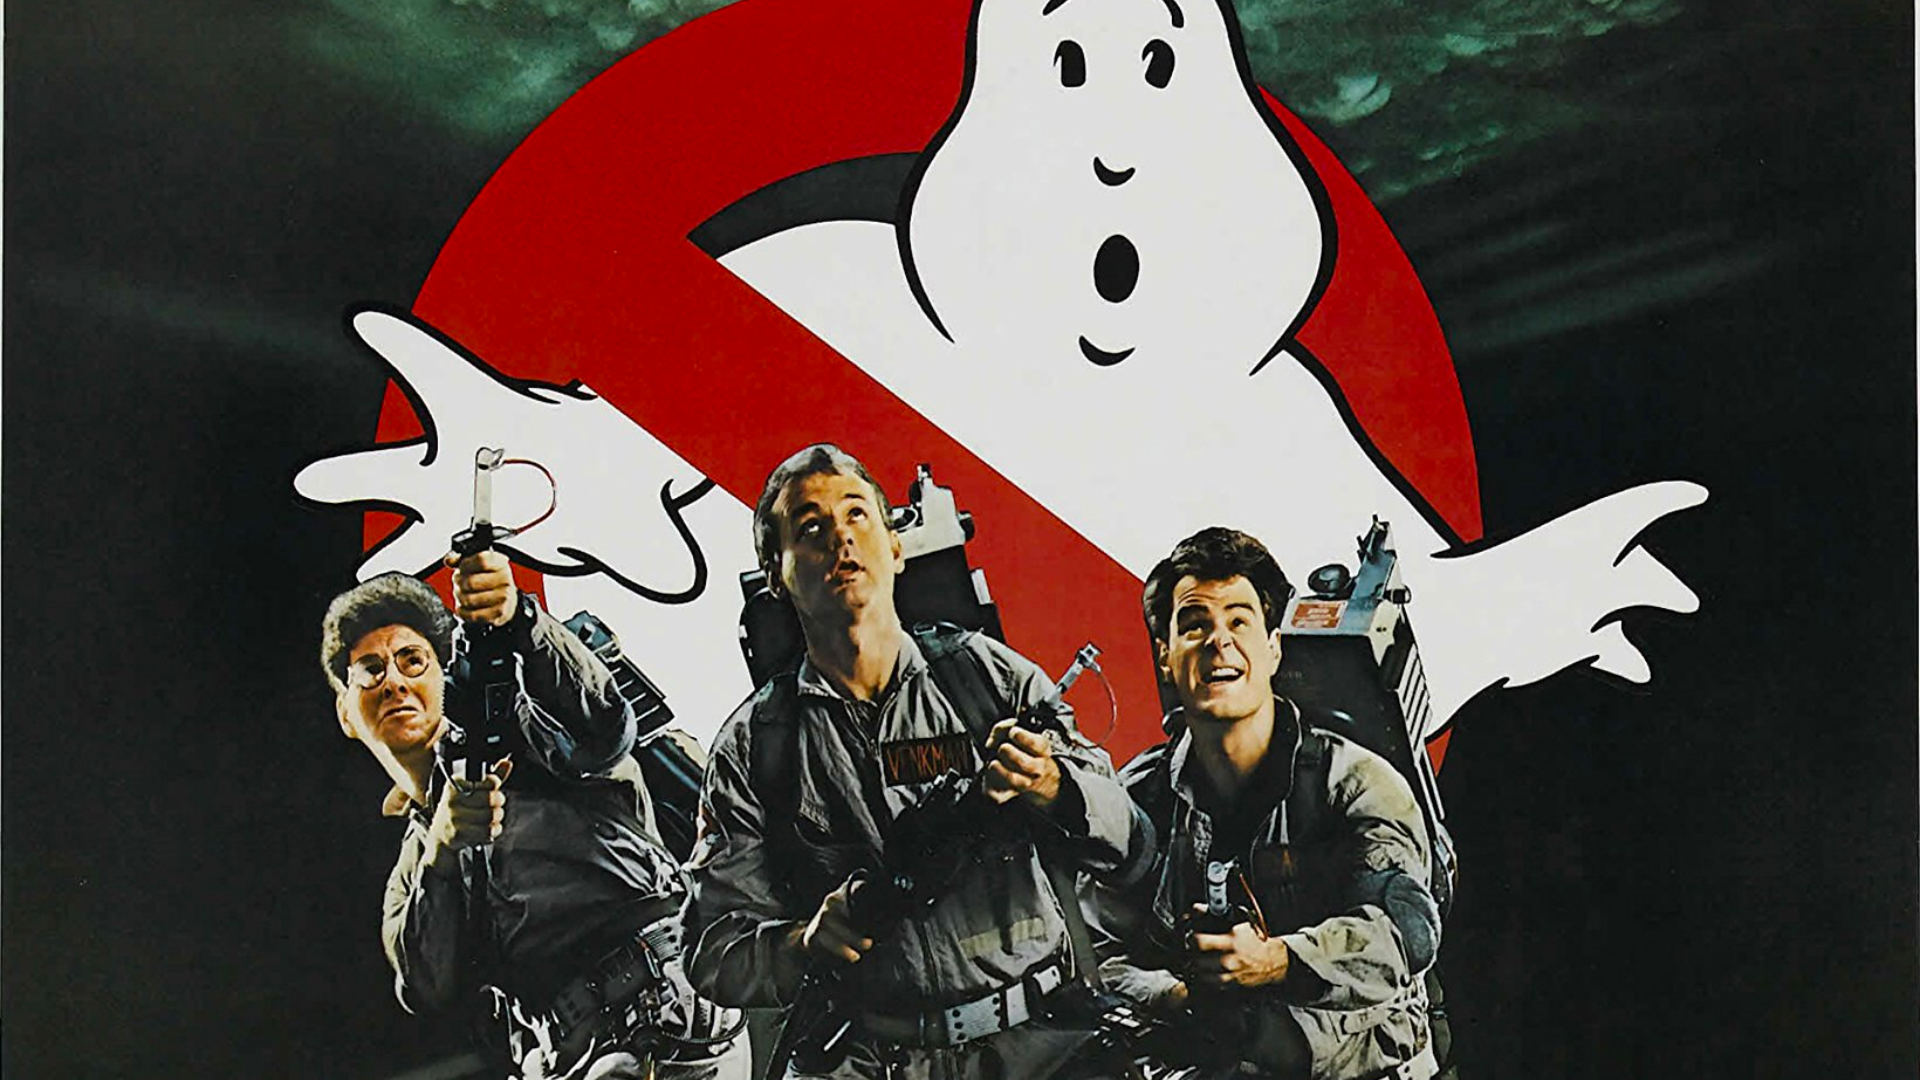 Ghostbusters (1984) - Soundtracks - IMDb